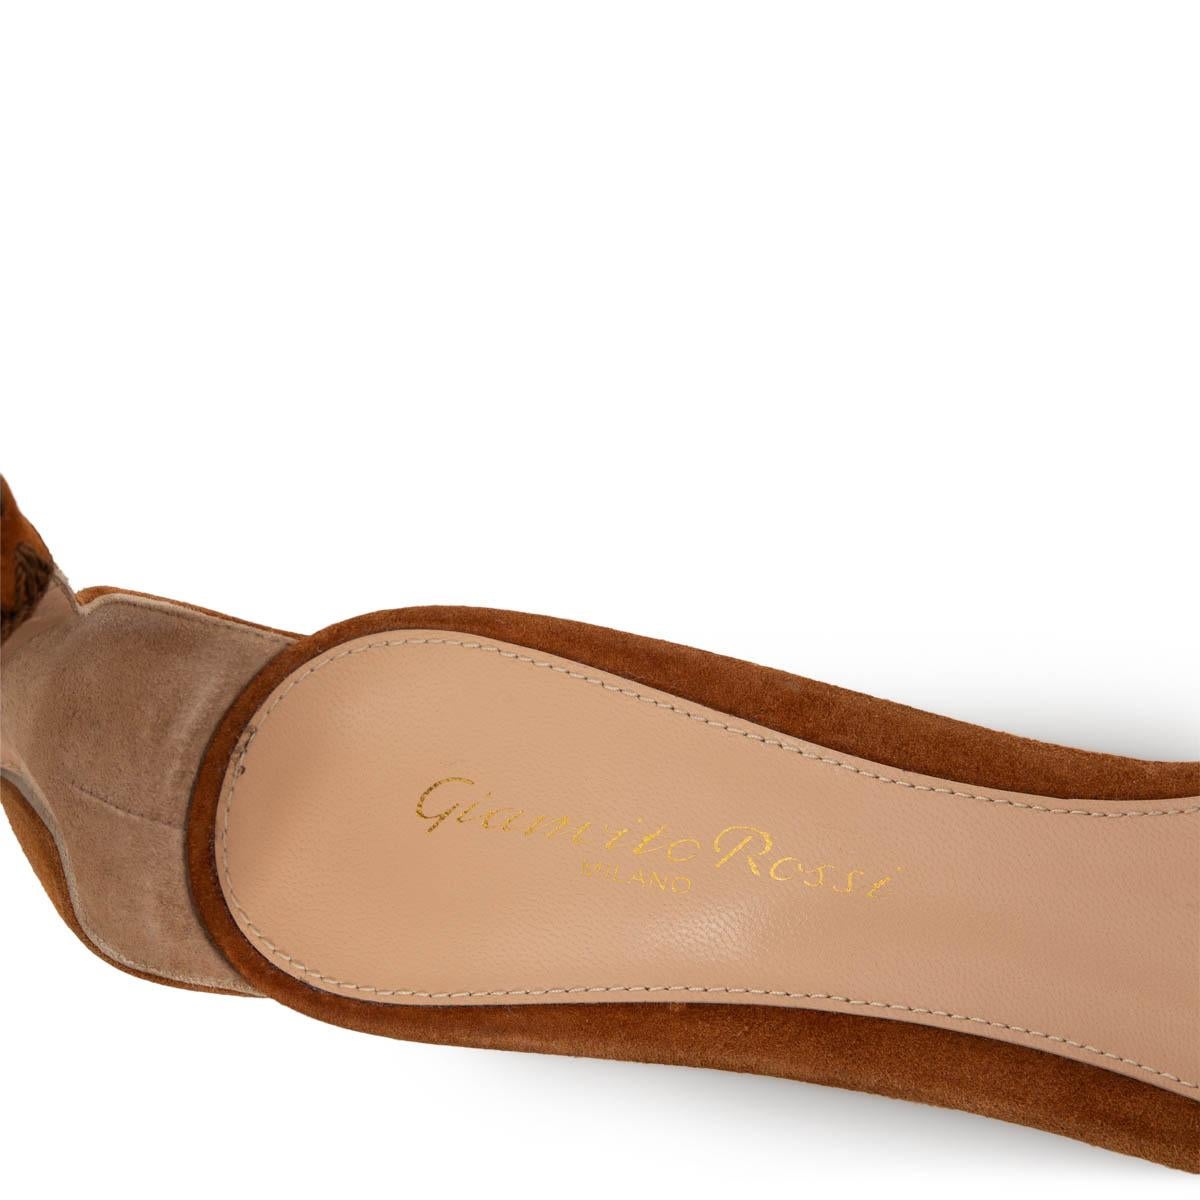 GIANVITO ROSSI cognac brown suede PORTOFINO 105 Sandals Shoes 37.5 In Excellent Condition For Sale In Zürich, CH